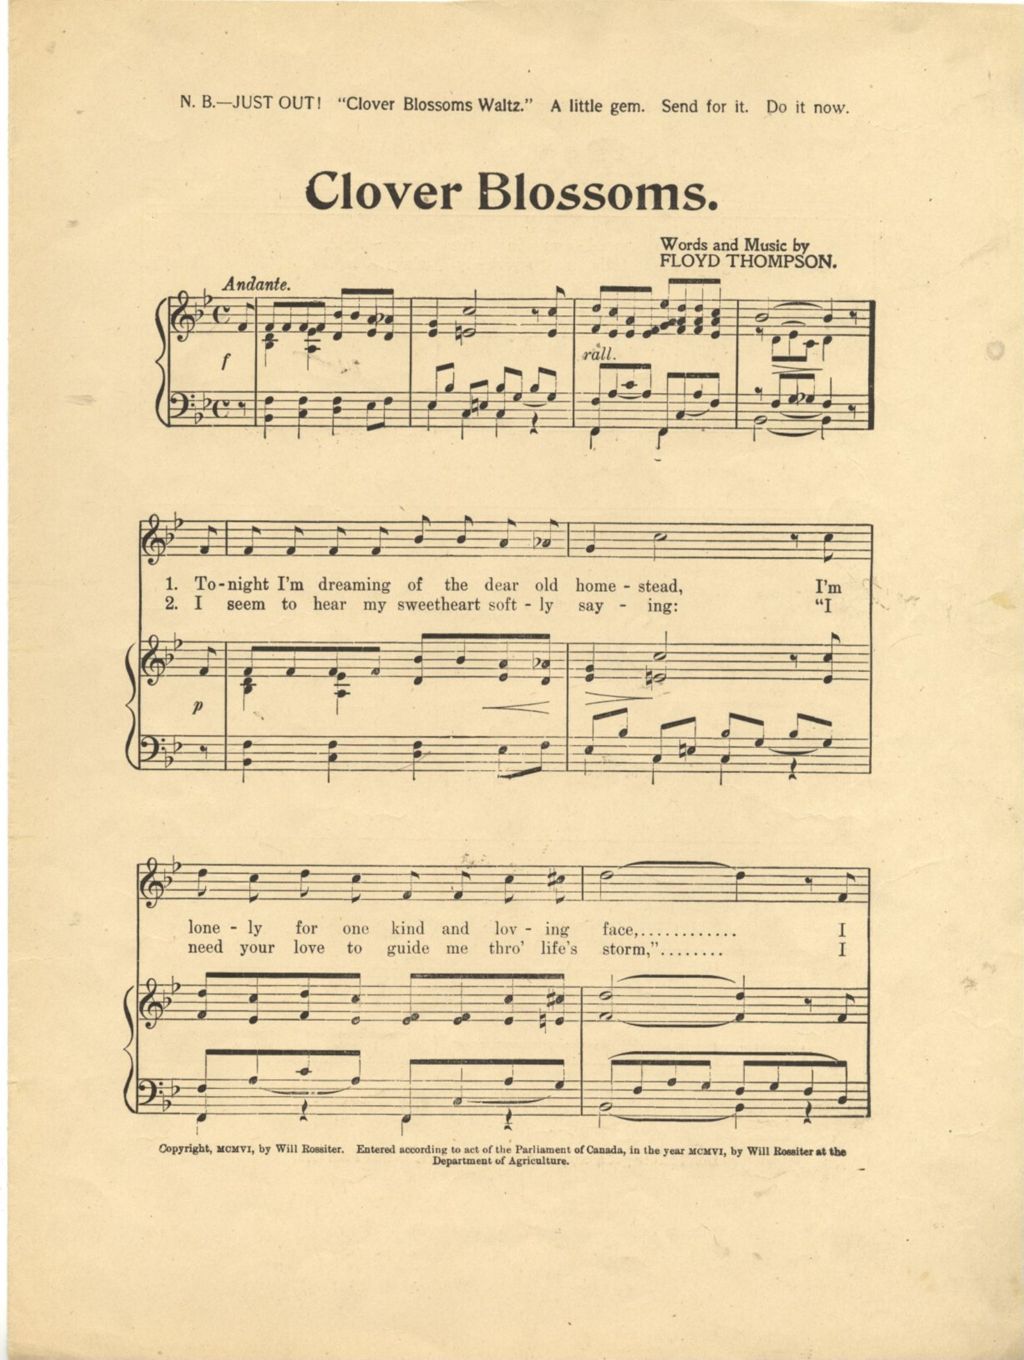 Miniature of Clover Blossoms